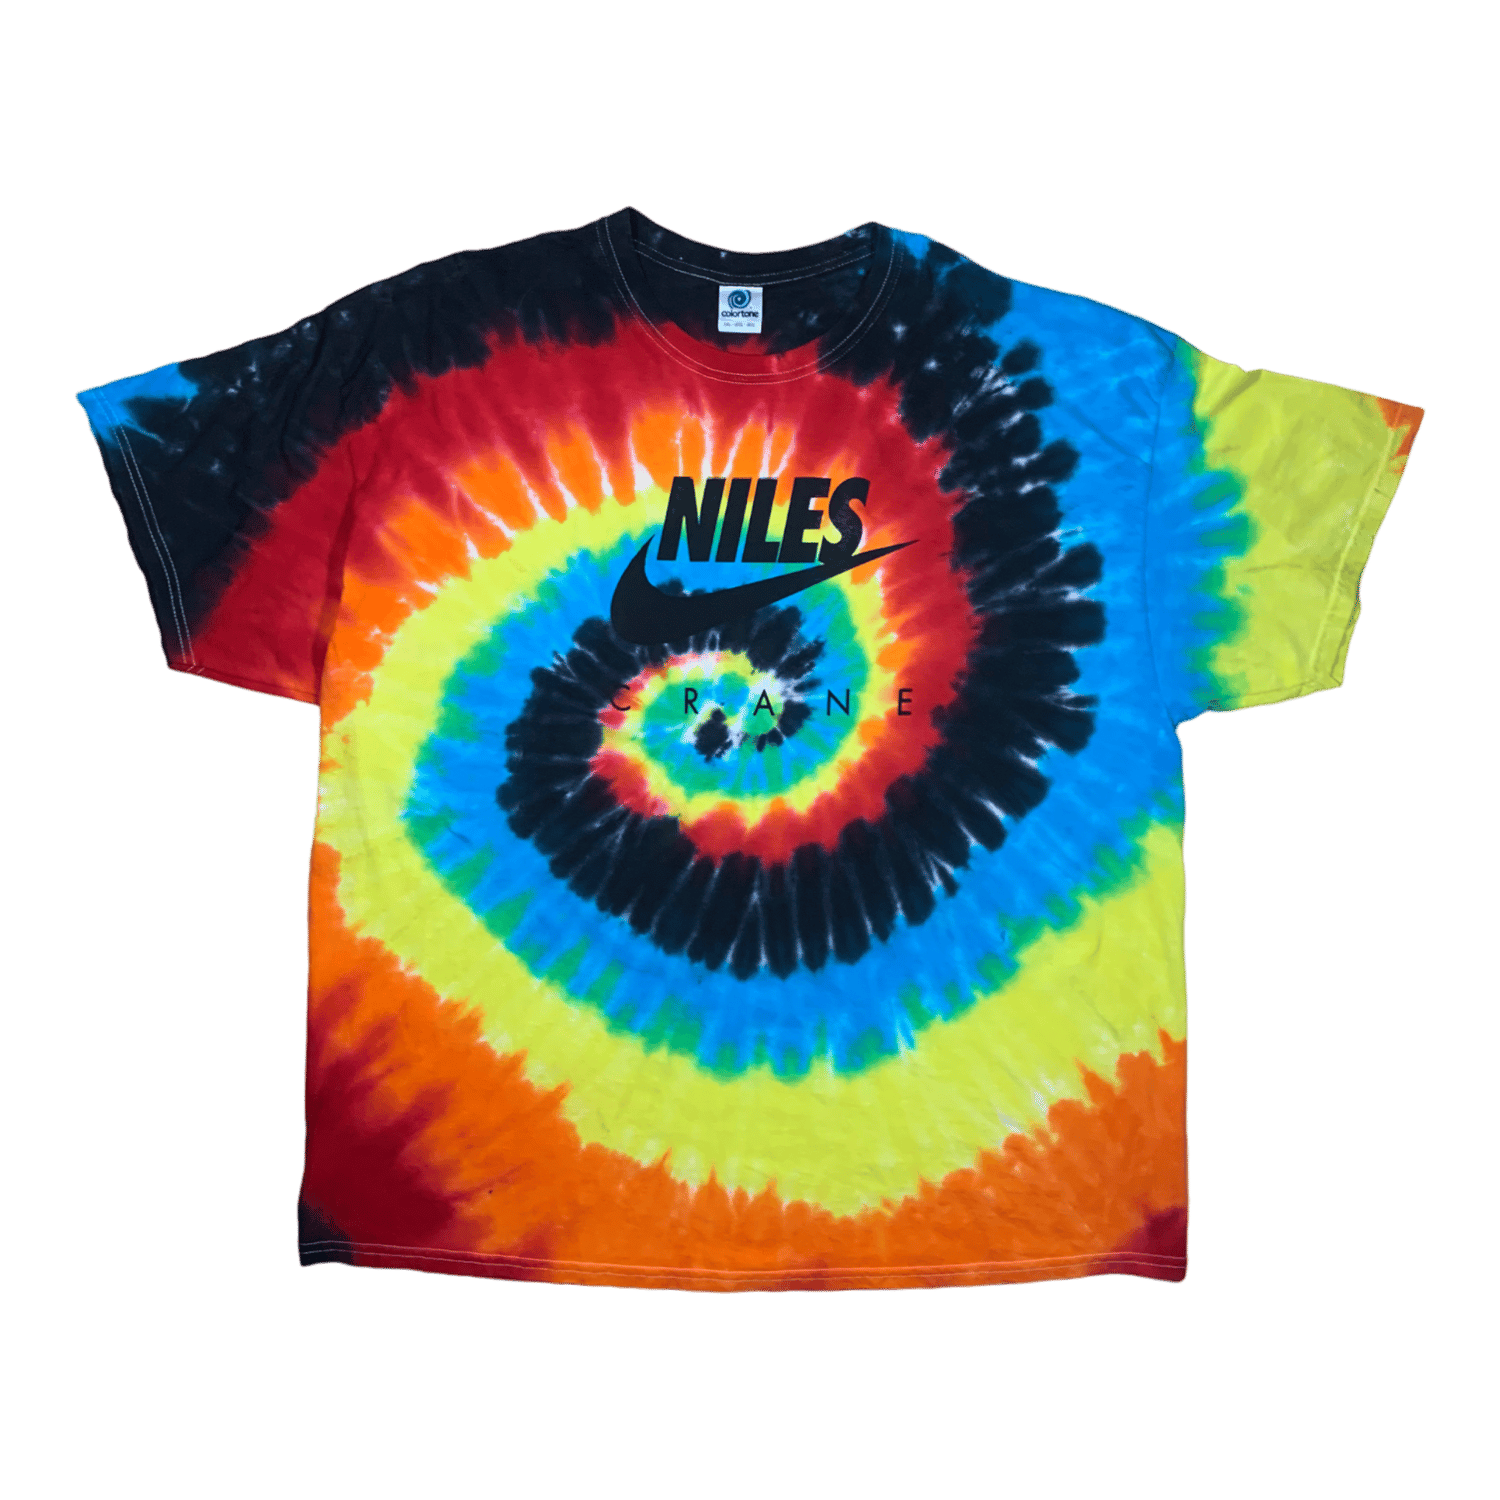 NILES T-SHIRT — Black Tie Dye 3XL